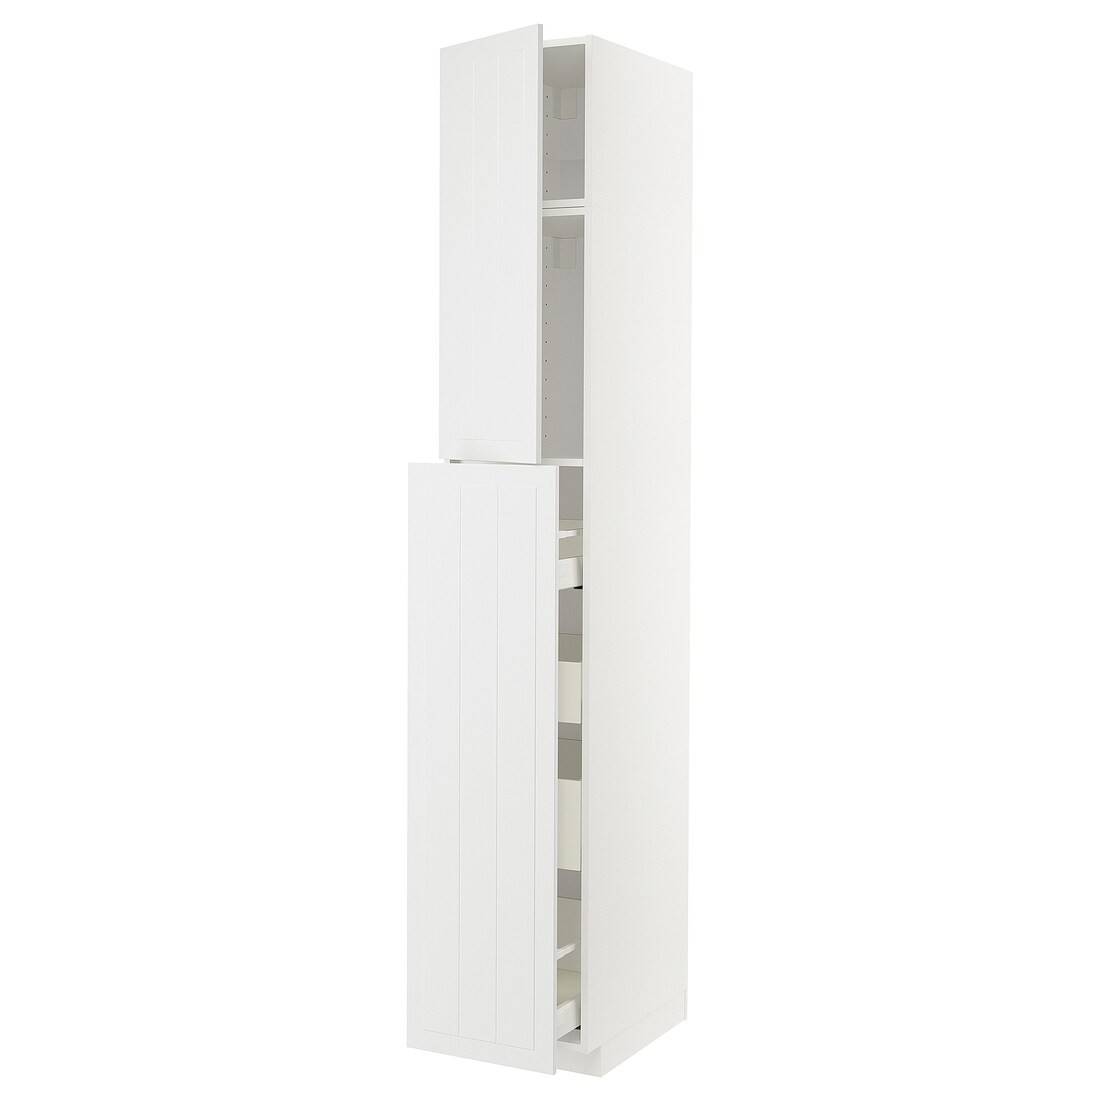 IKEA METOD МЕТОД / MAXIMERA МАКСИМЕРА Высокий шкаф полки / ящики, белый / Stensund белый, 40x60x240 см 49455126 | 494.551.26